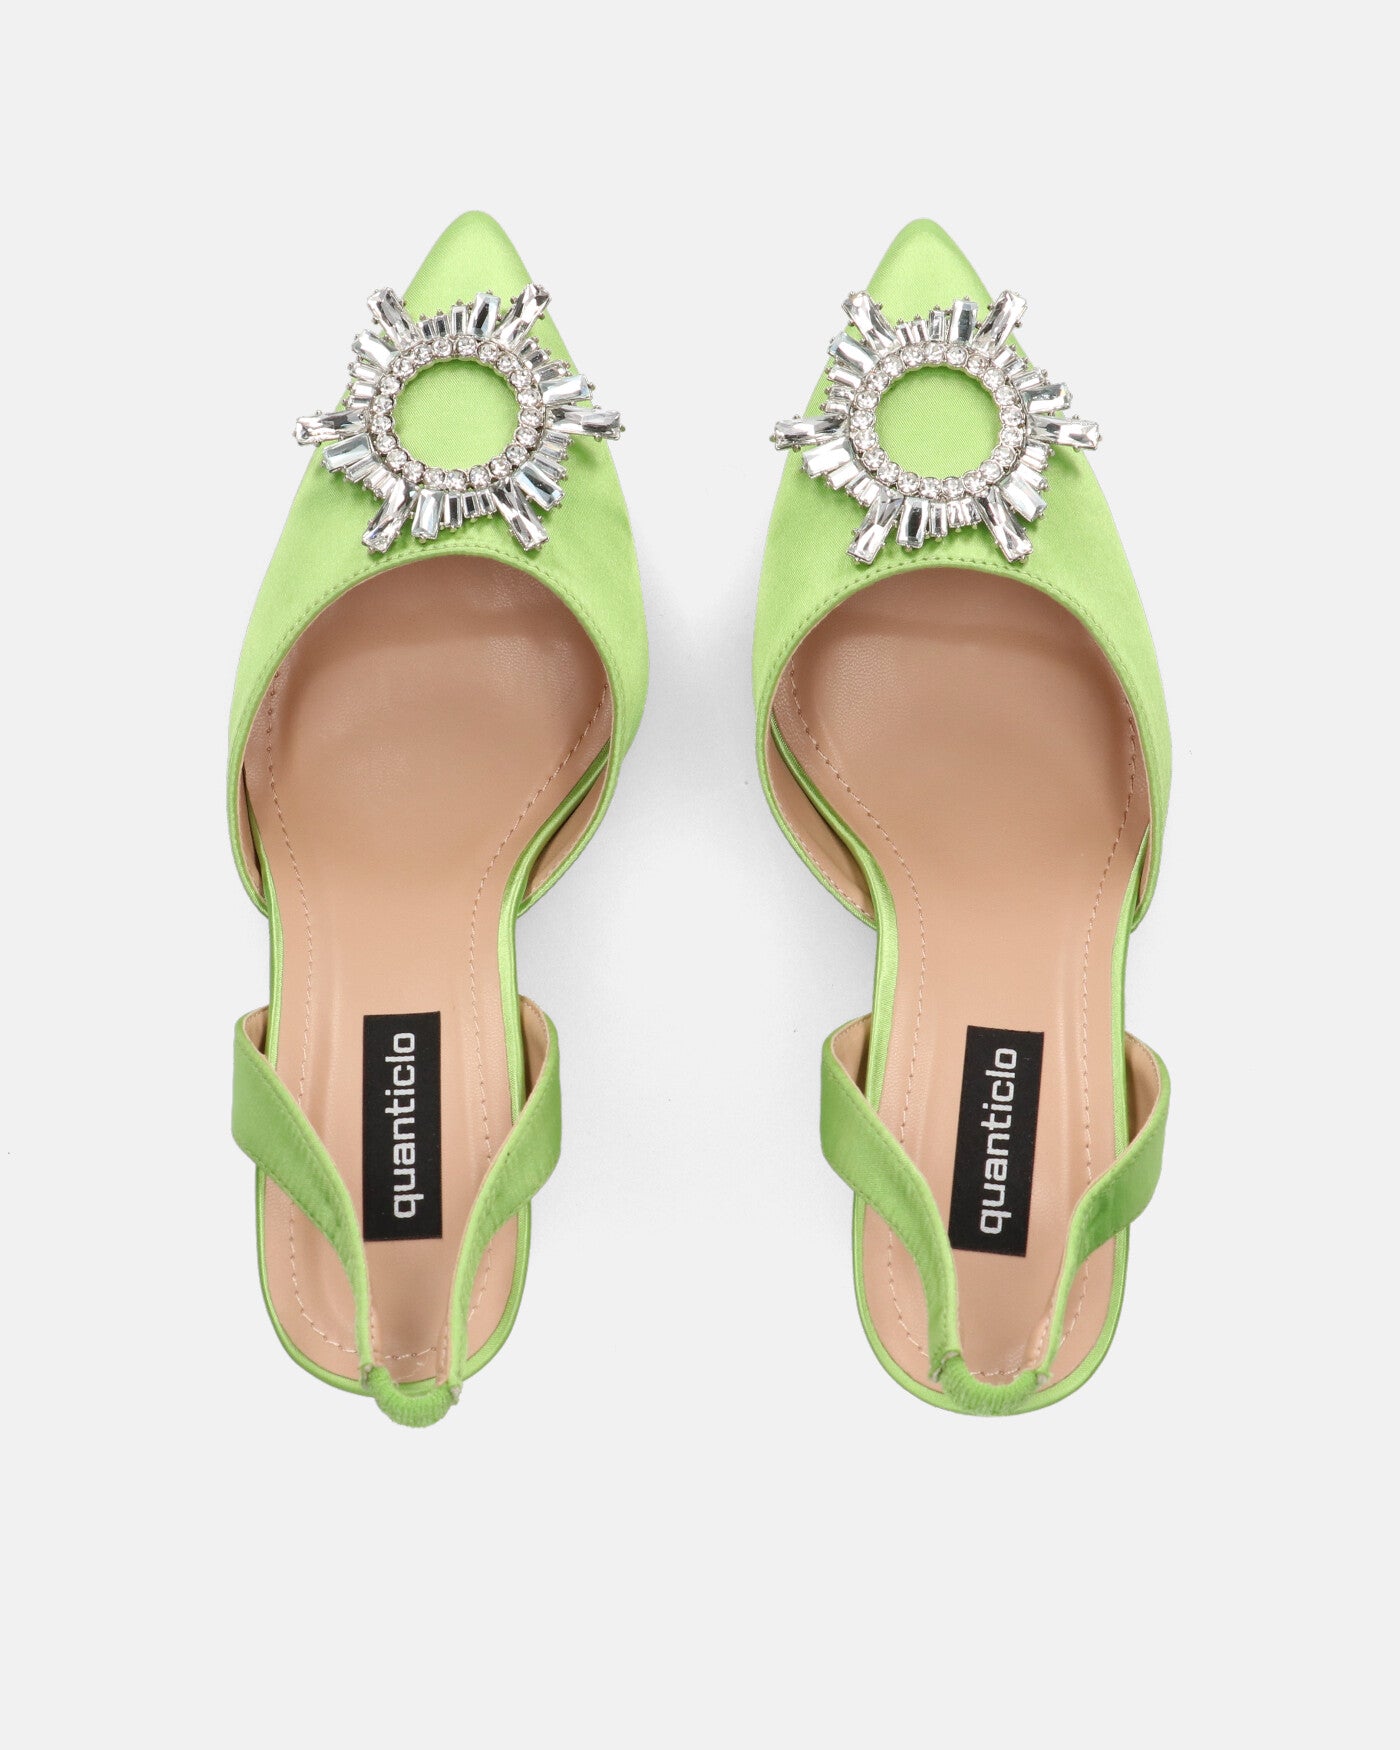 MAGDA - zapato de tacón en satin verde manzana con gemas decorativas